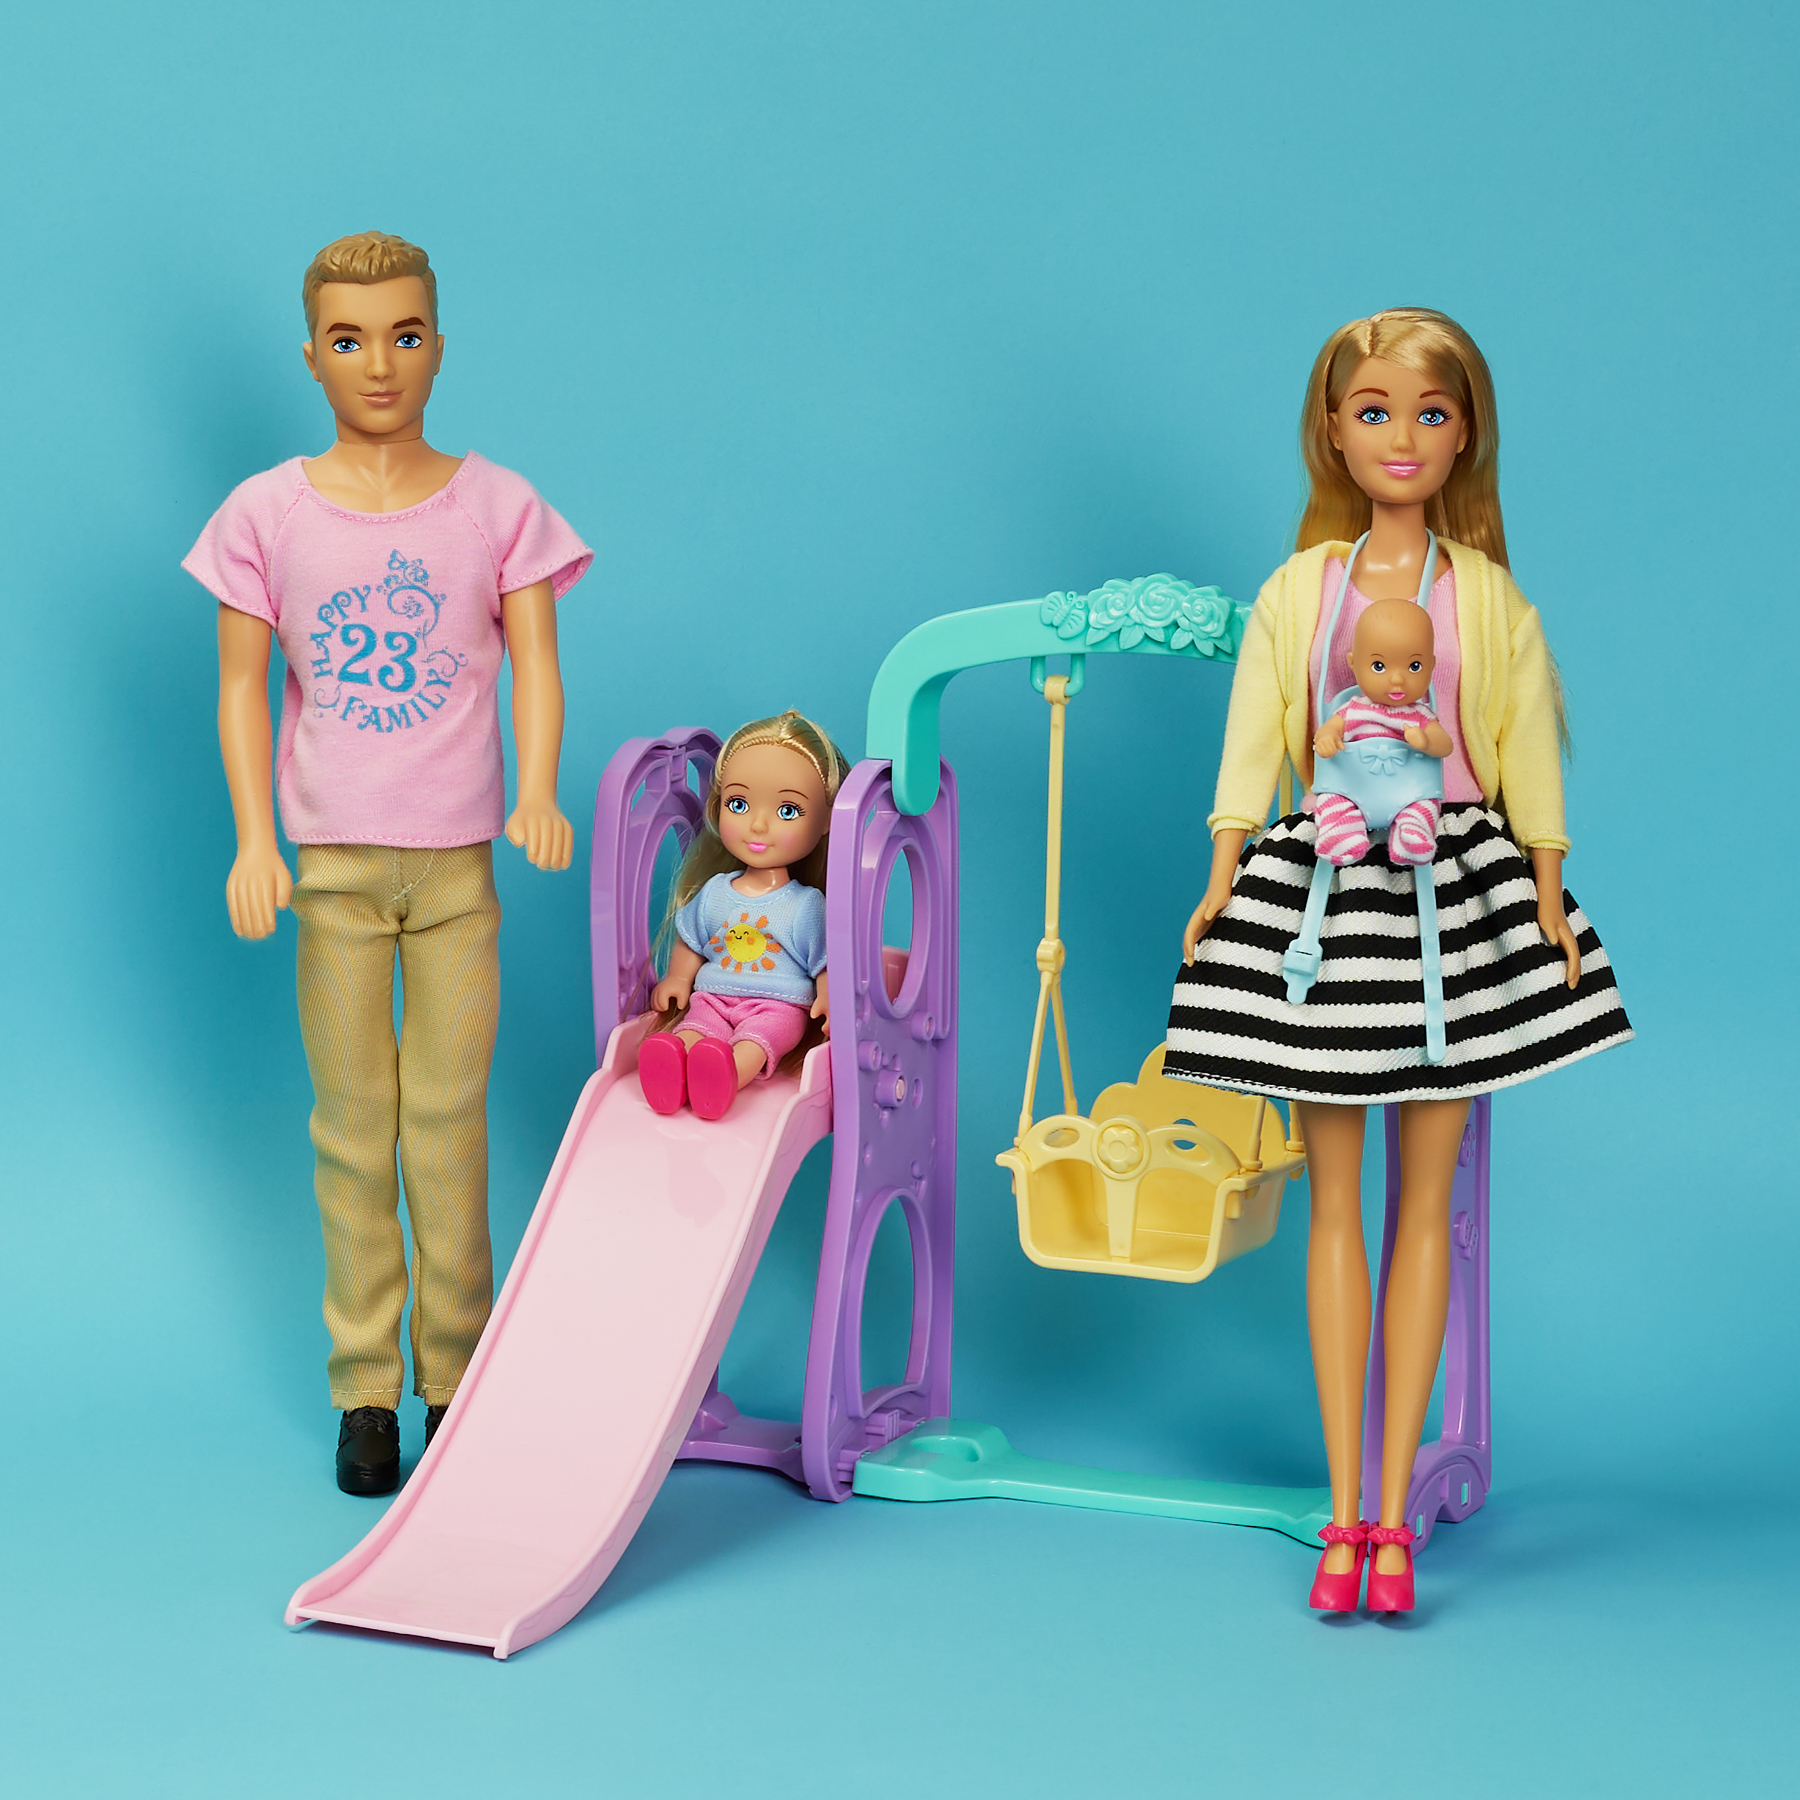 Набор кукол для девочек "Семья" на прогулке, 40х32х8см, ABS пластик - #14